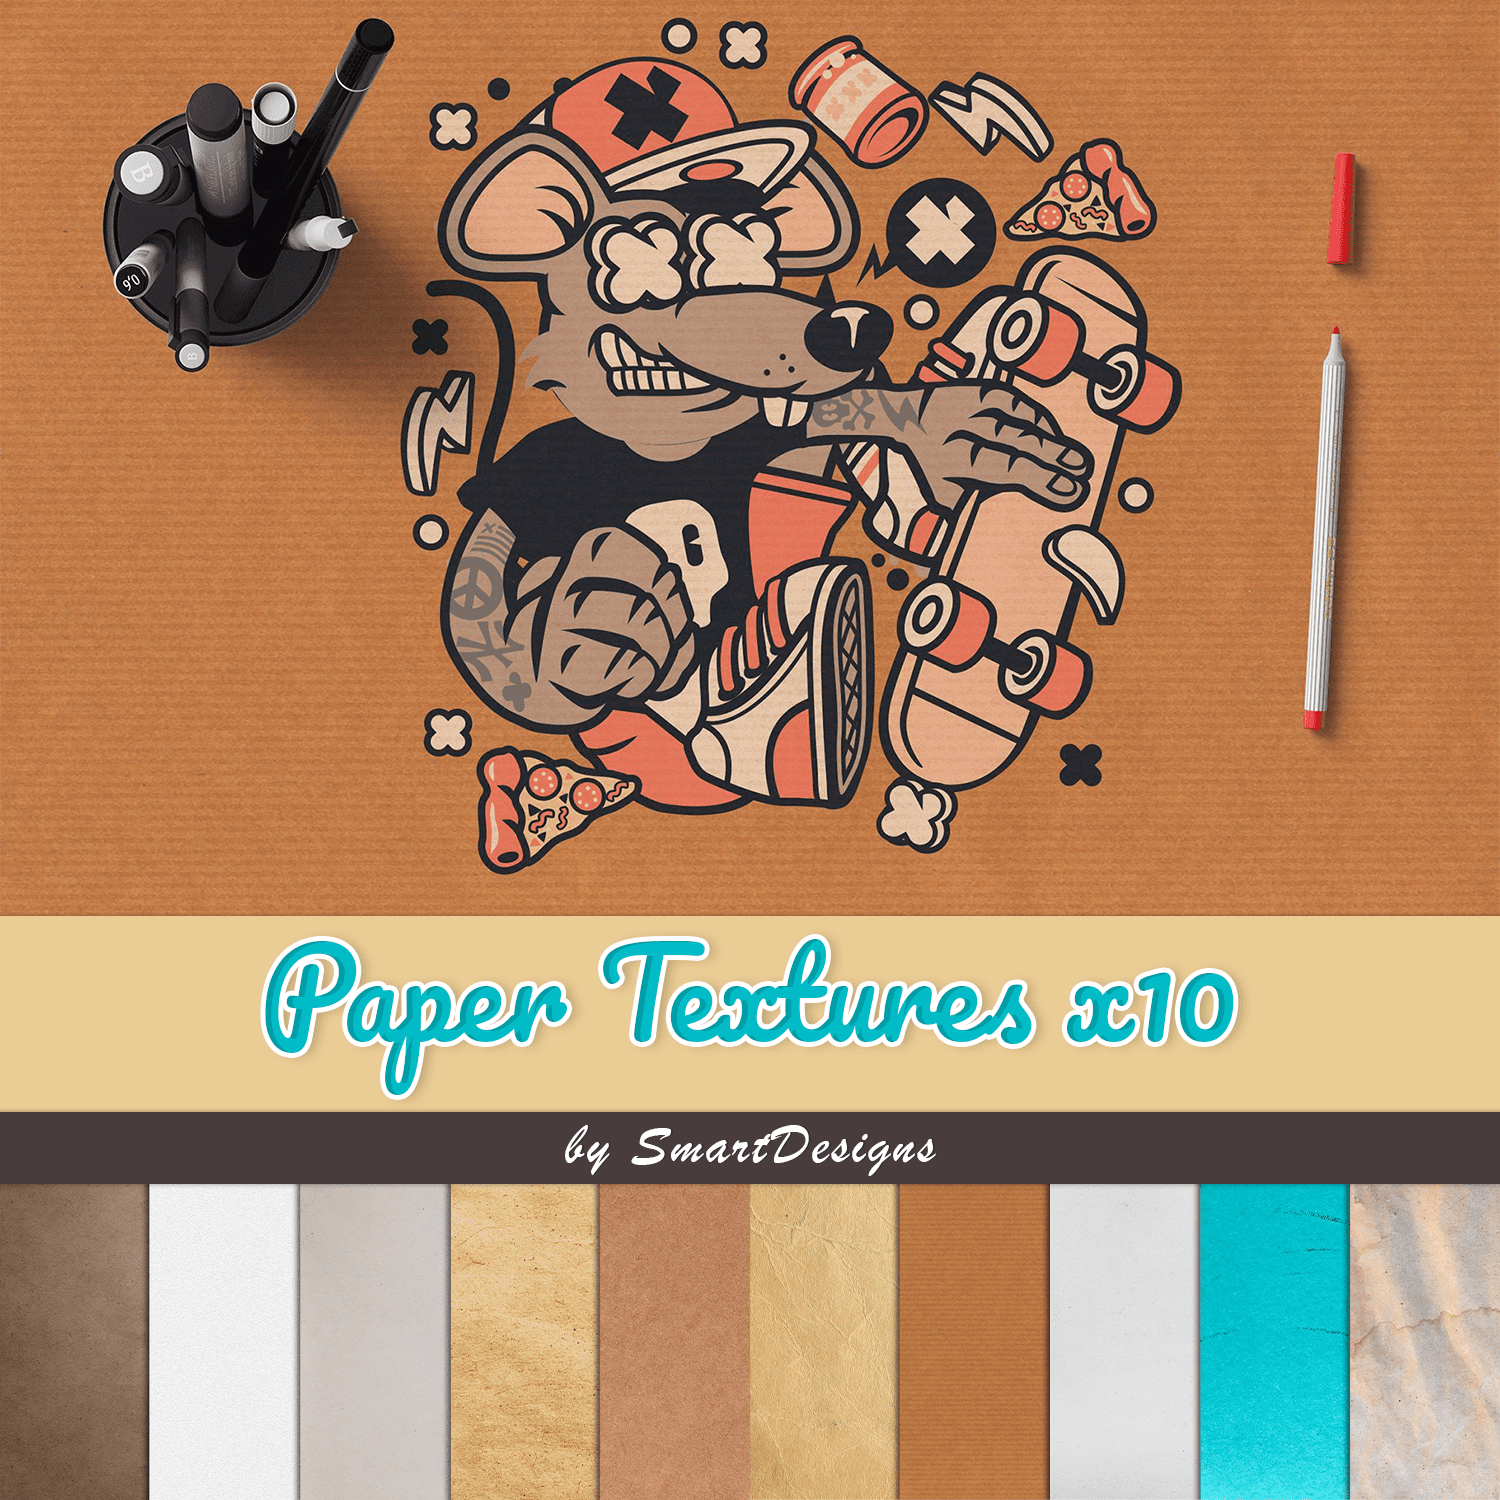 Prints of paper textures.